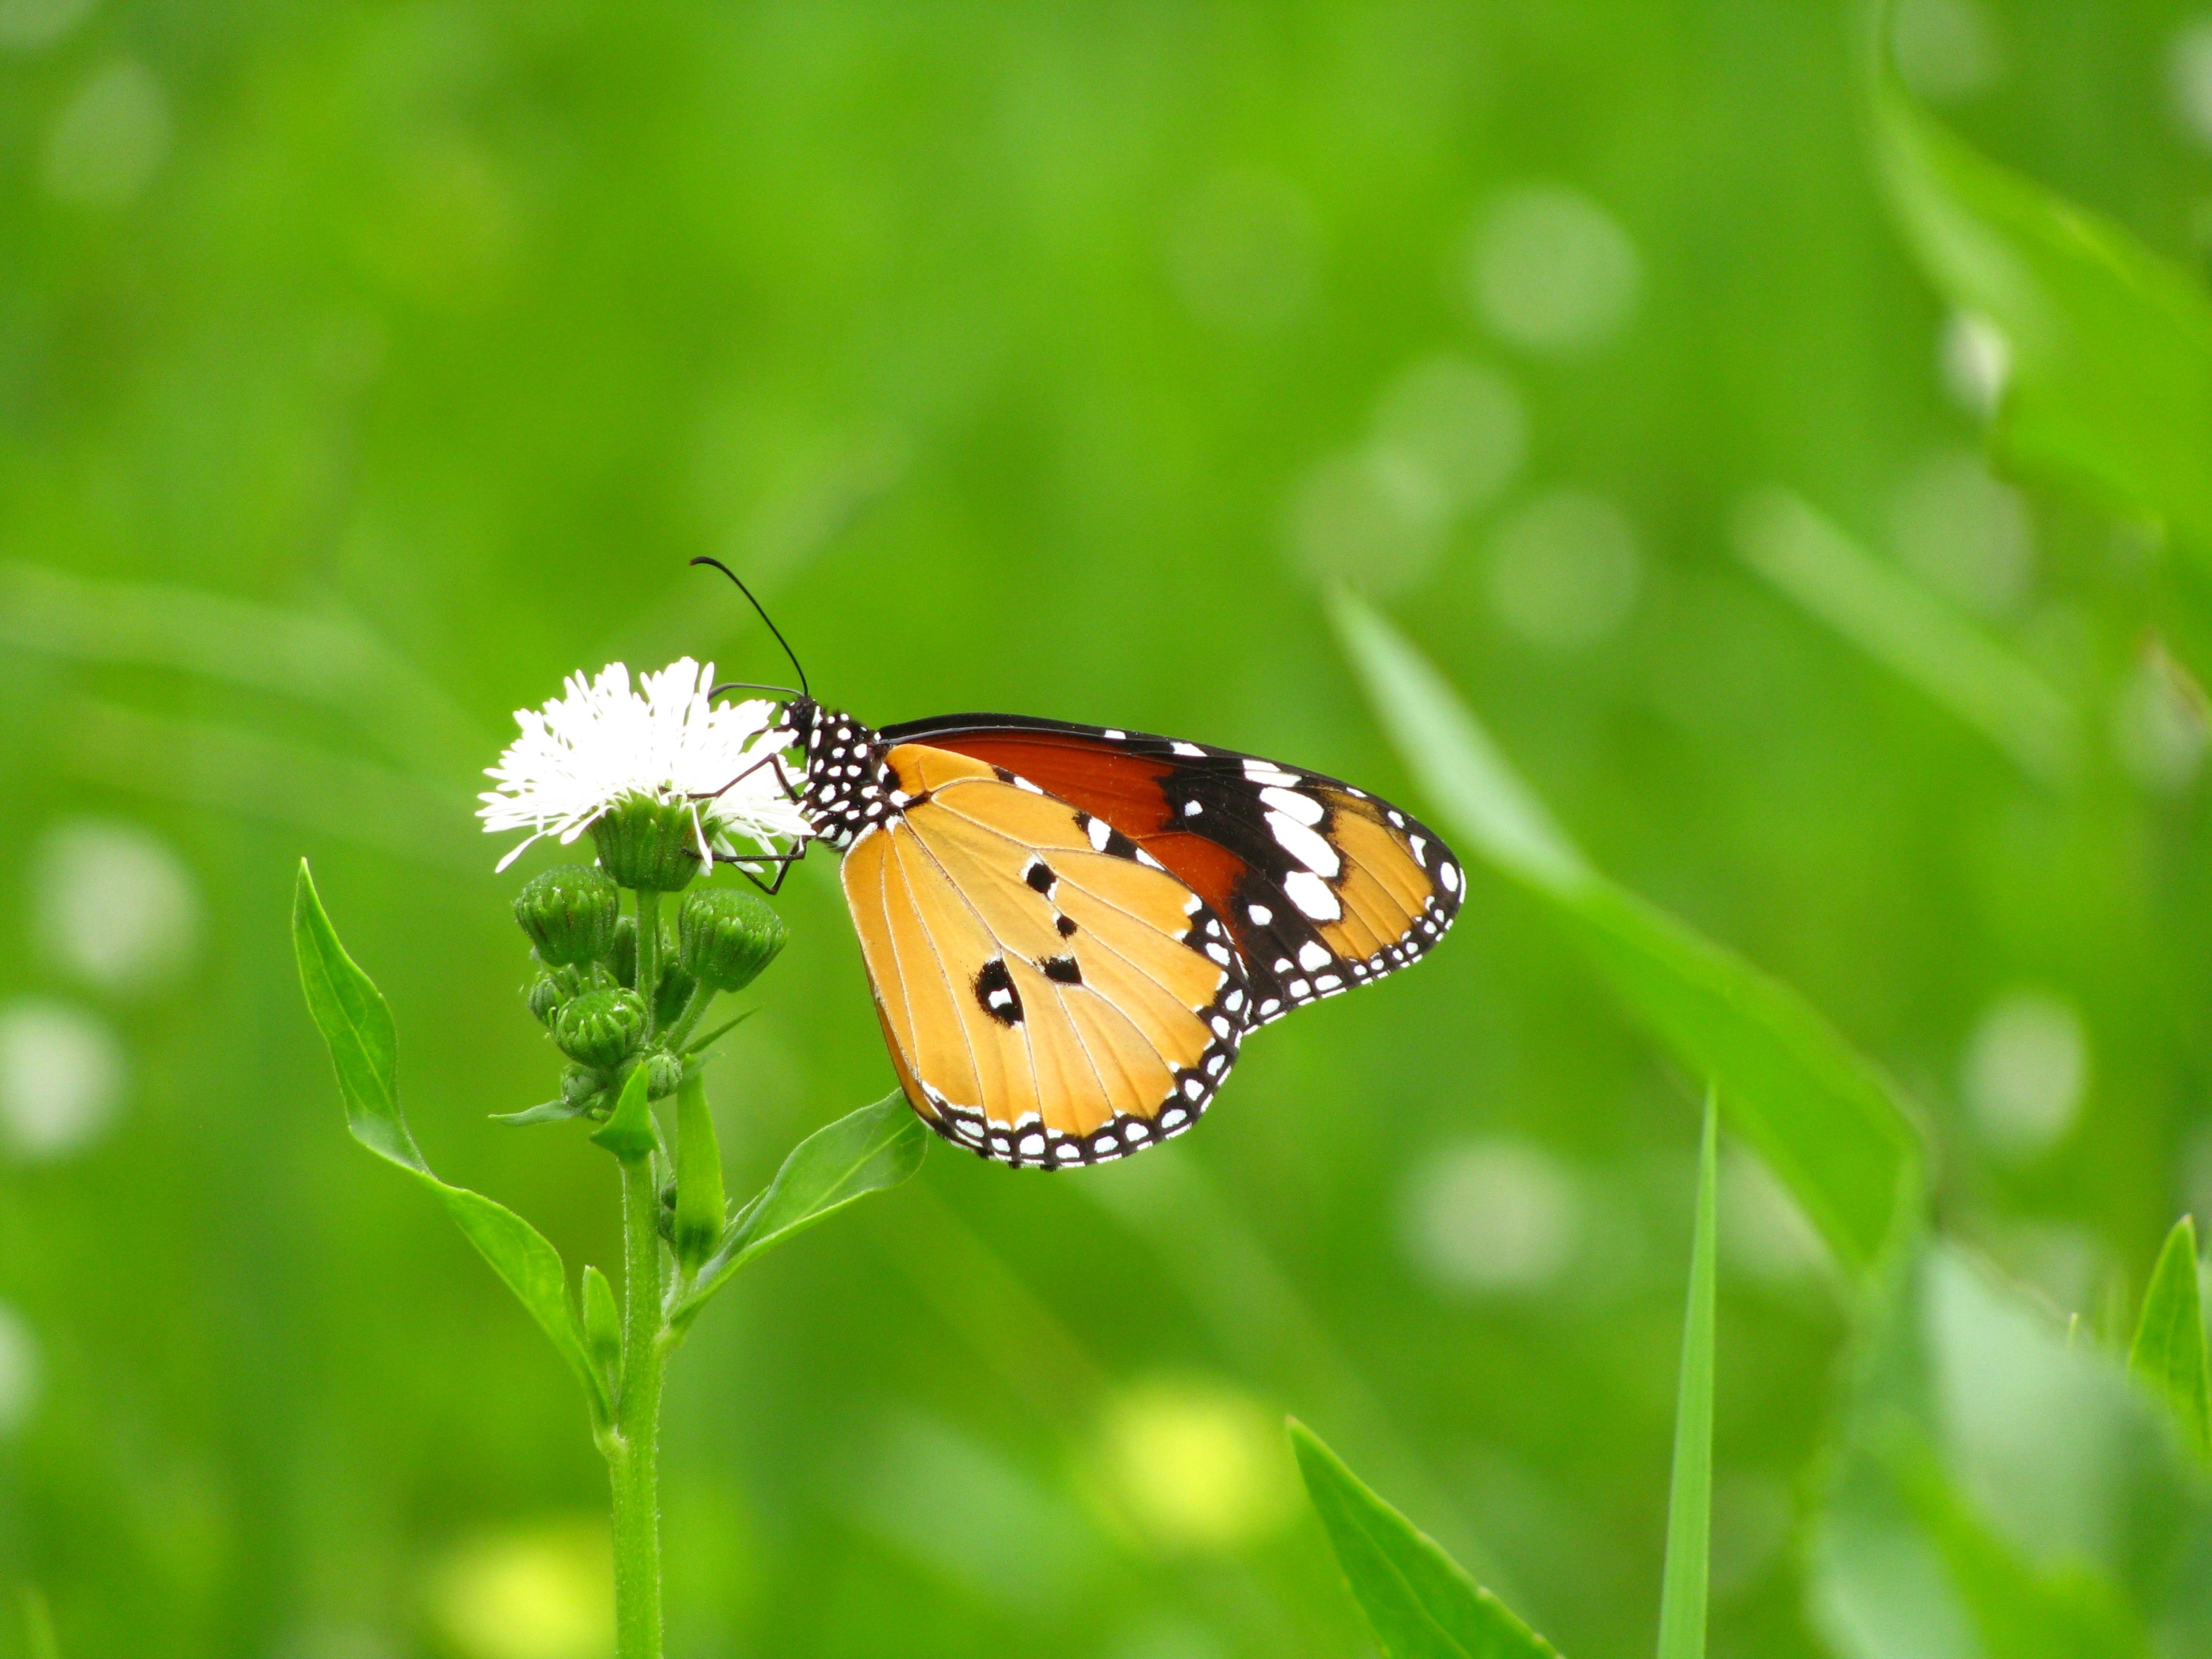 Цветок бабочка зеленый. Бабочка. Зелень и бабочки. Насекомые в траве. Бабочки на травинке в природе.